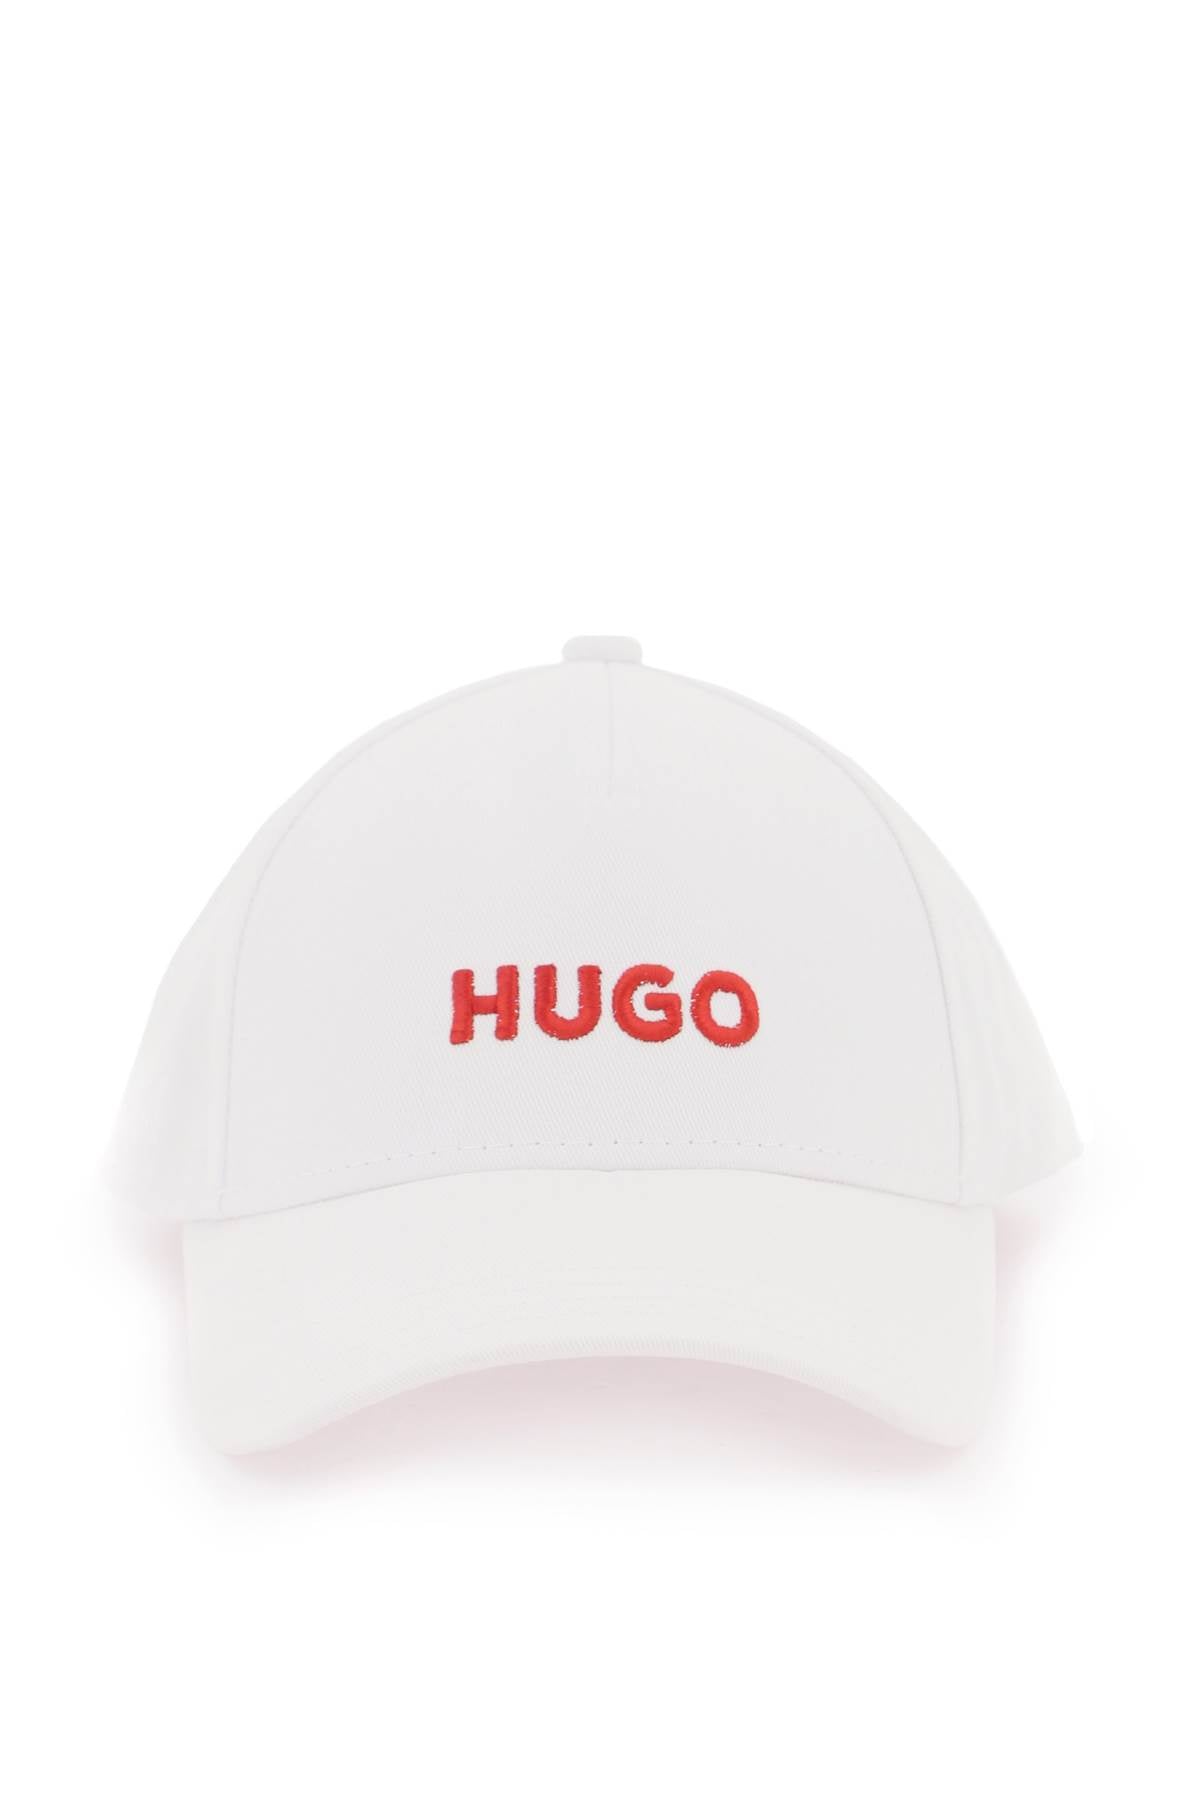 Hugo baseball cap with embroidered logo – Italy Station